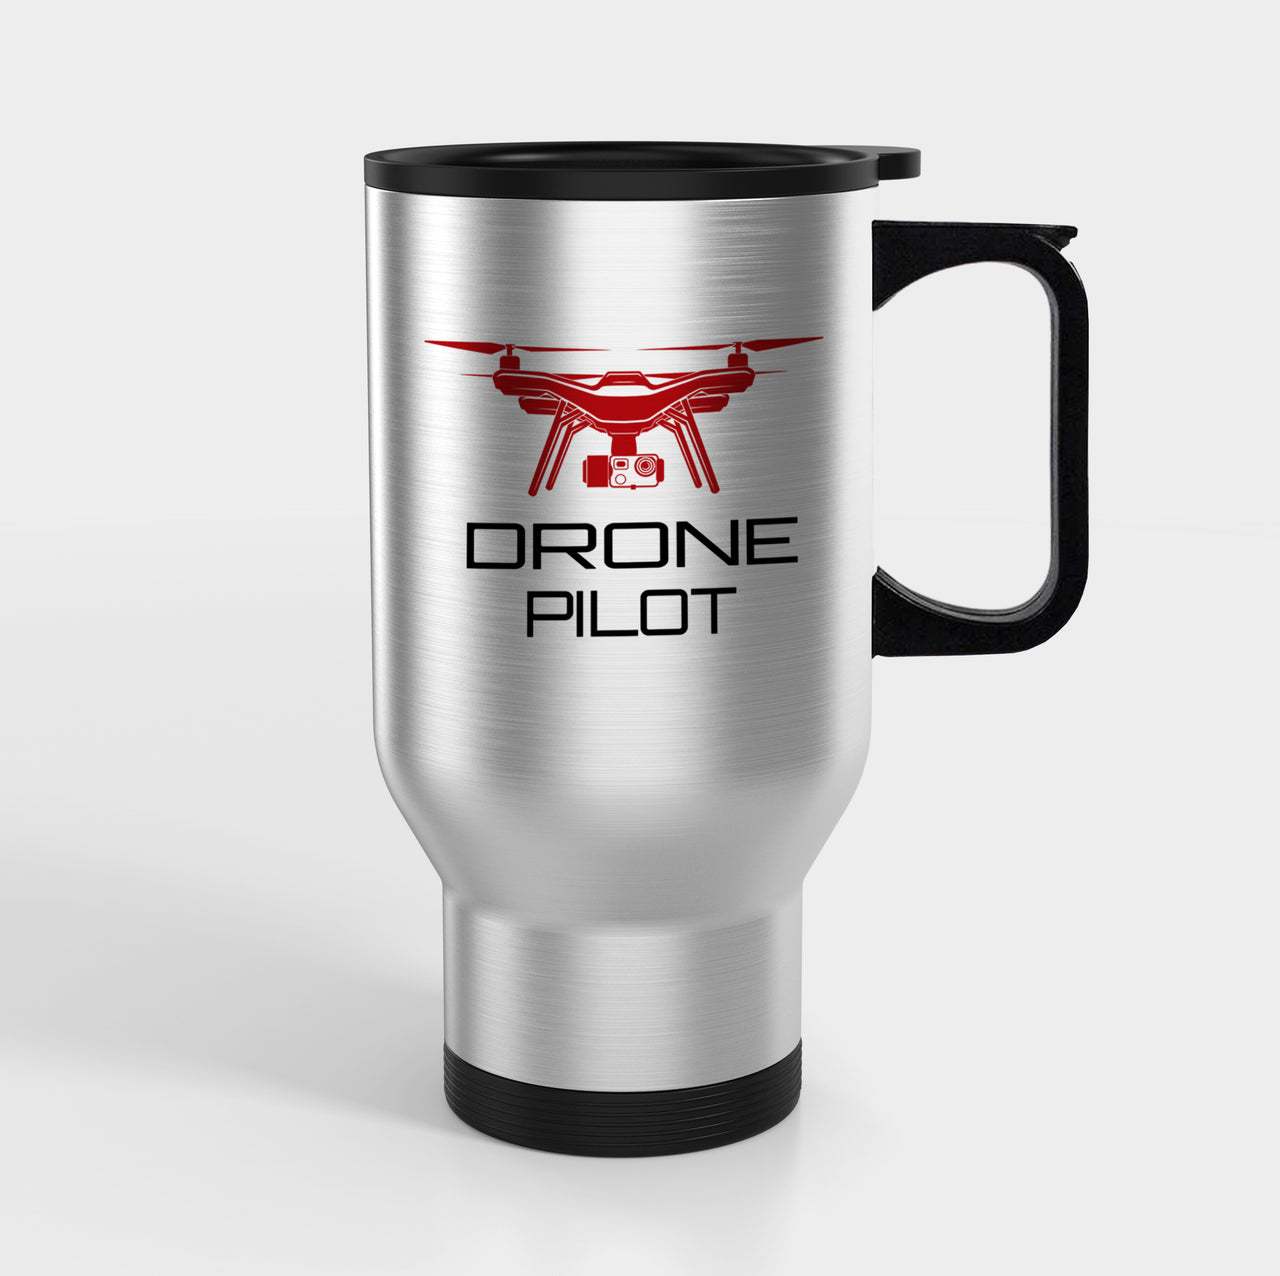 Drone Pilot Designed Travel Mugs (With Holder)